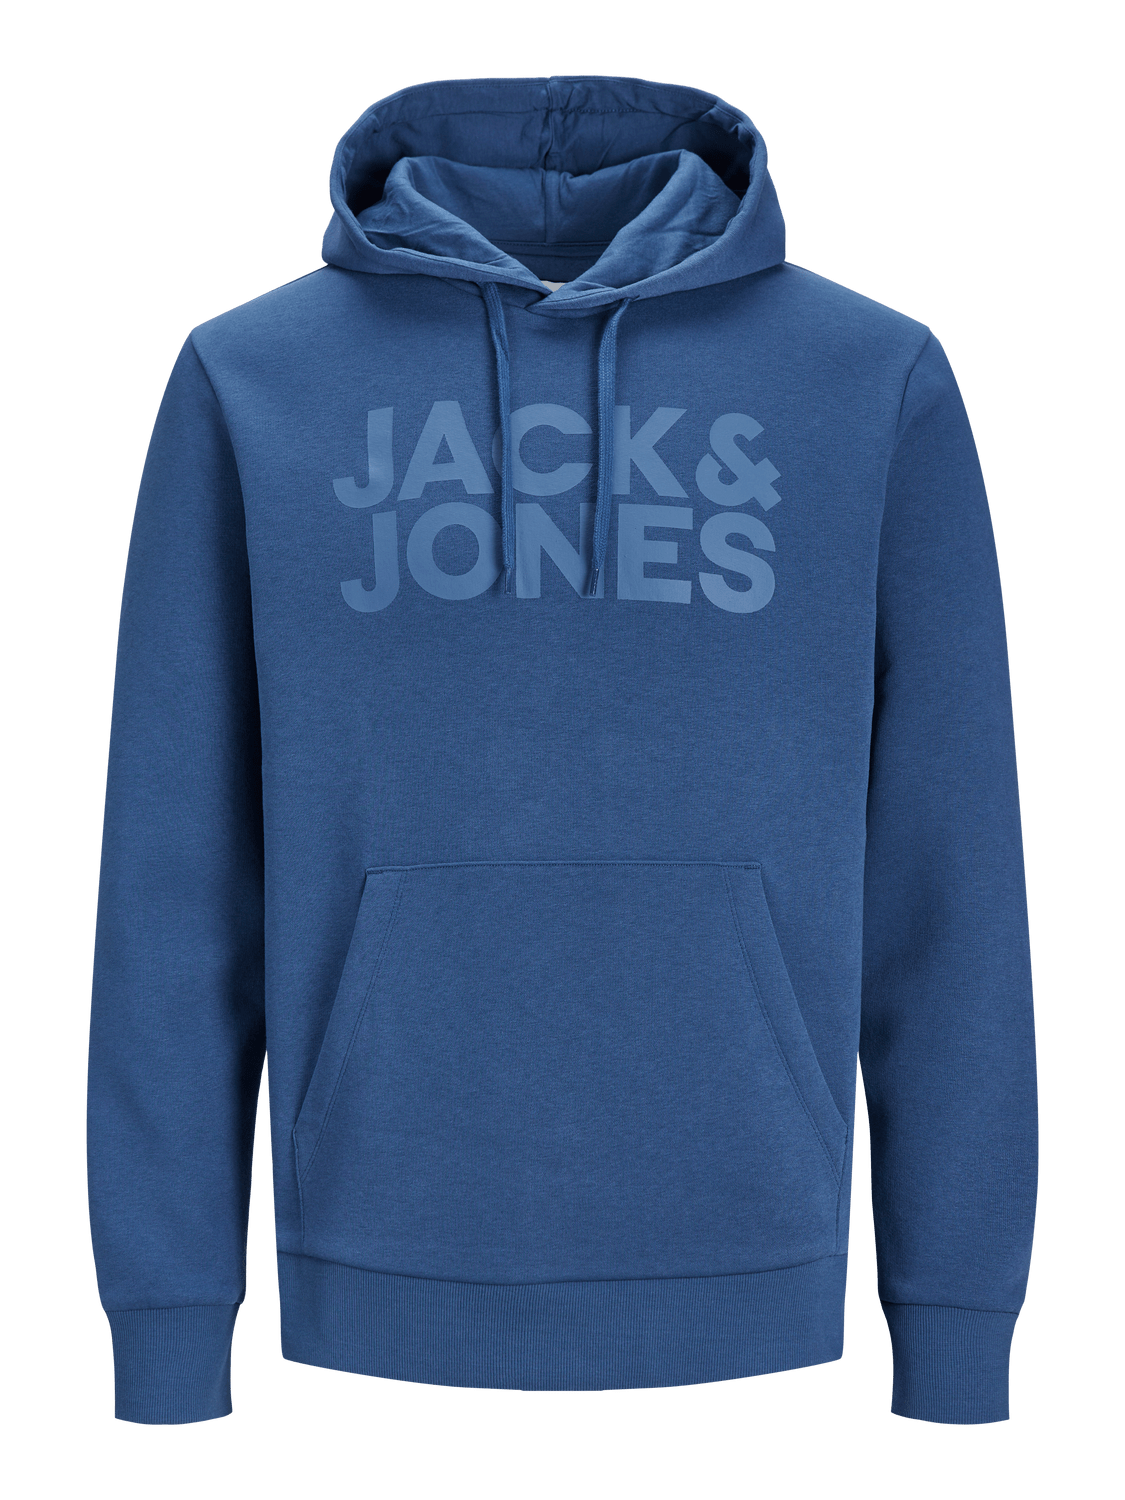 Jersey Hombre Jack & Jones modelo Leo Color Beige Talla S Color BEIGE